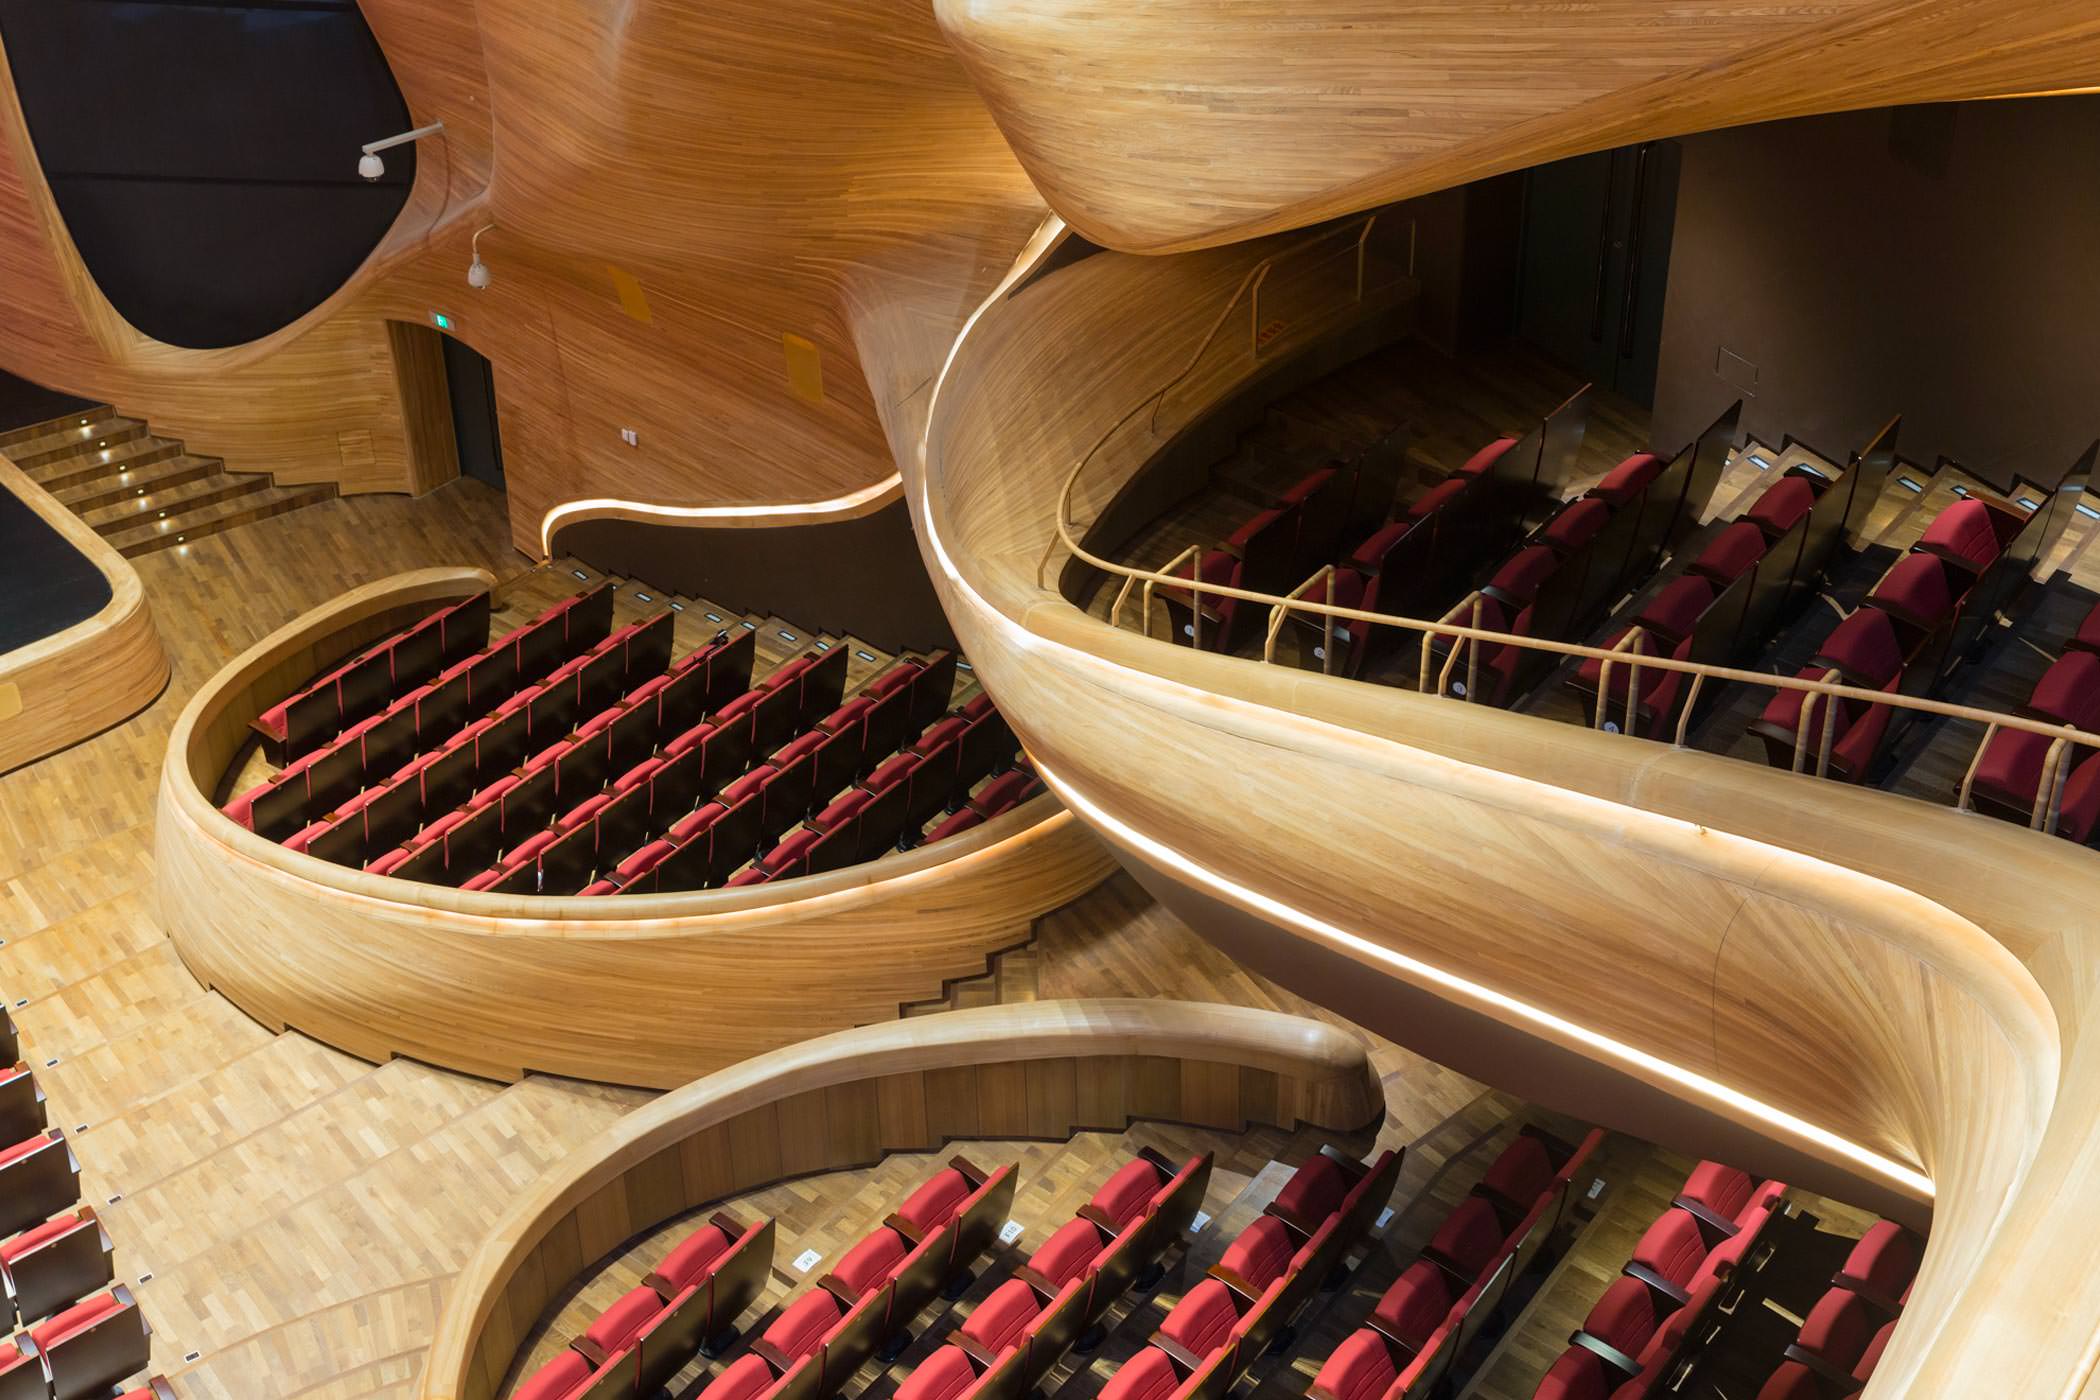 Harbin Opera House, Province du Heilongjiang, Chine, MAD Architects